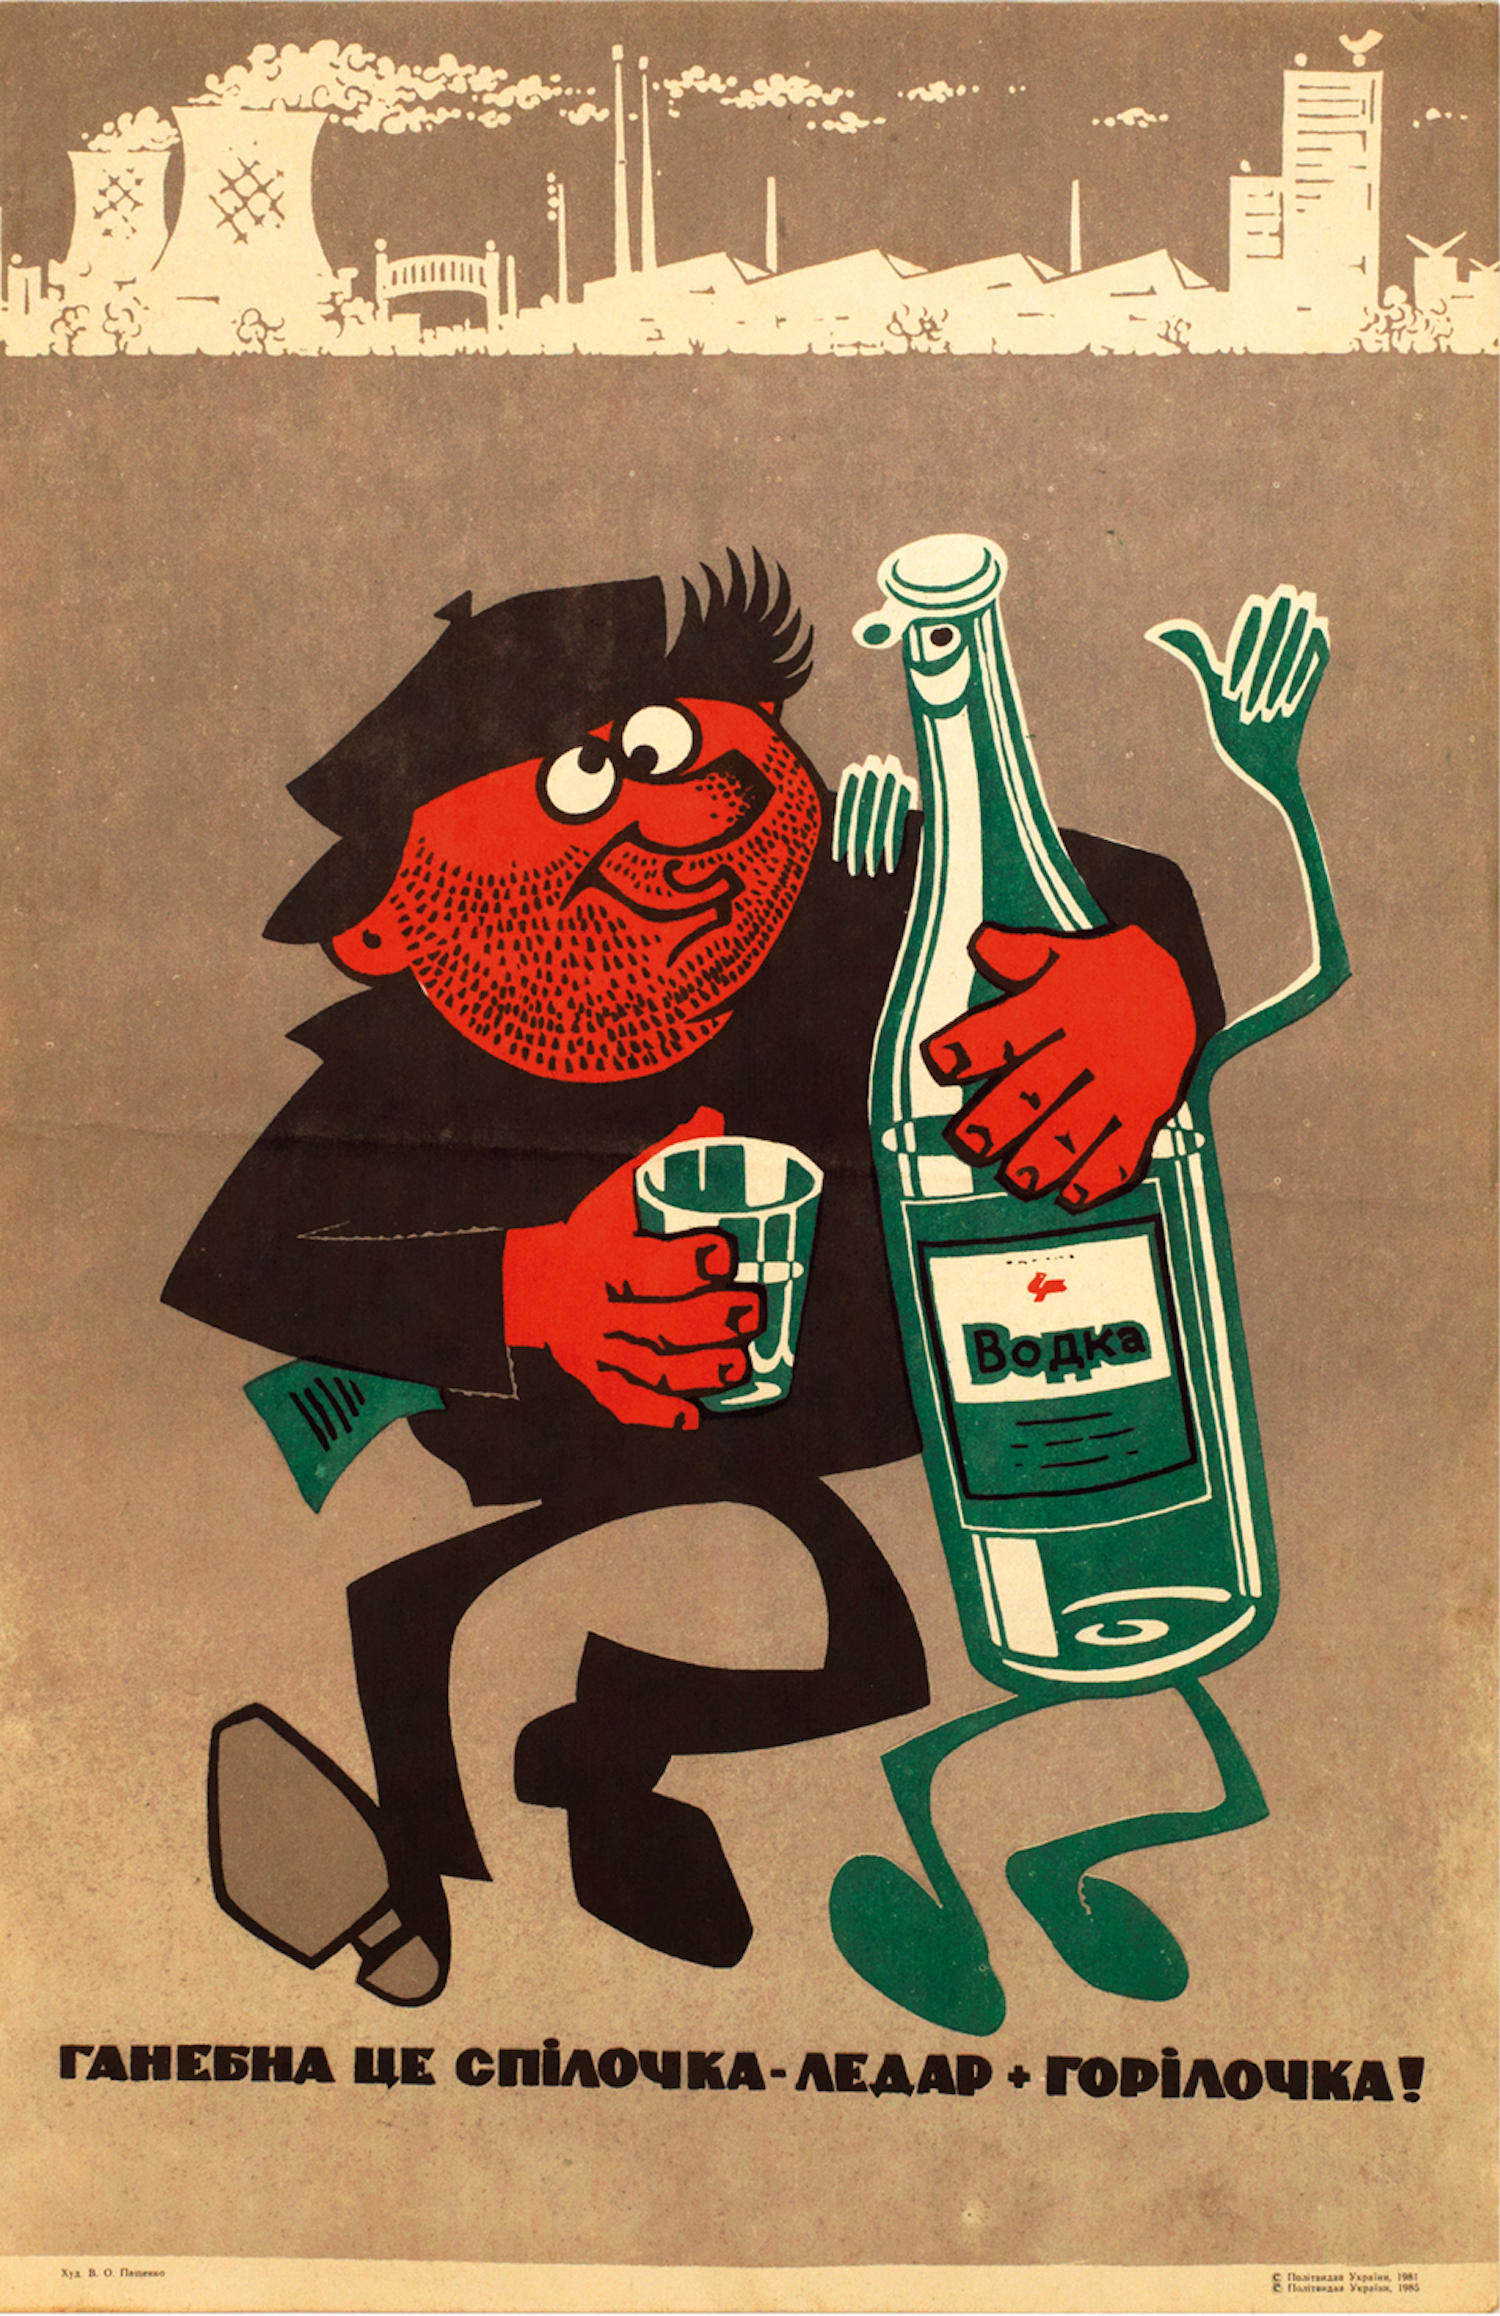 Affiche uit de Sovjettijd propaganda alcohol